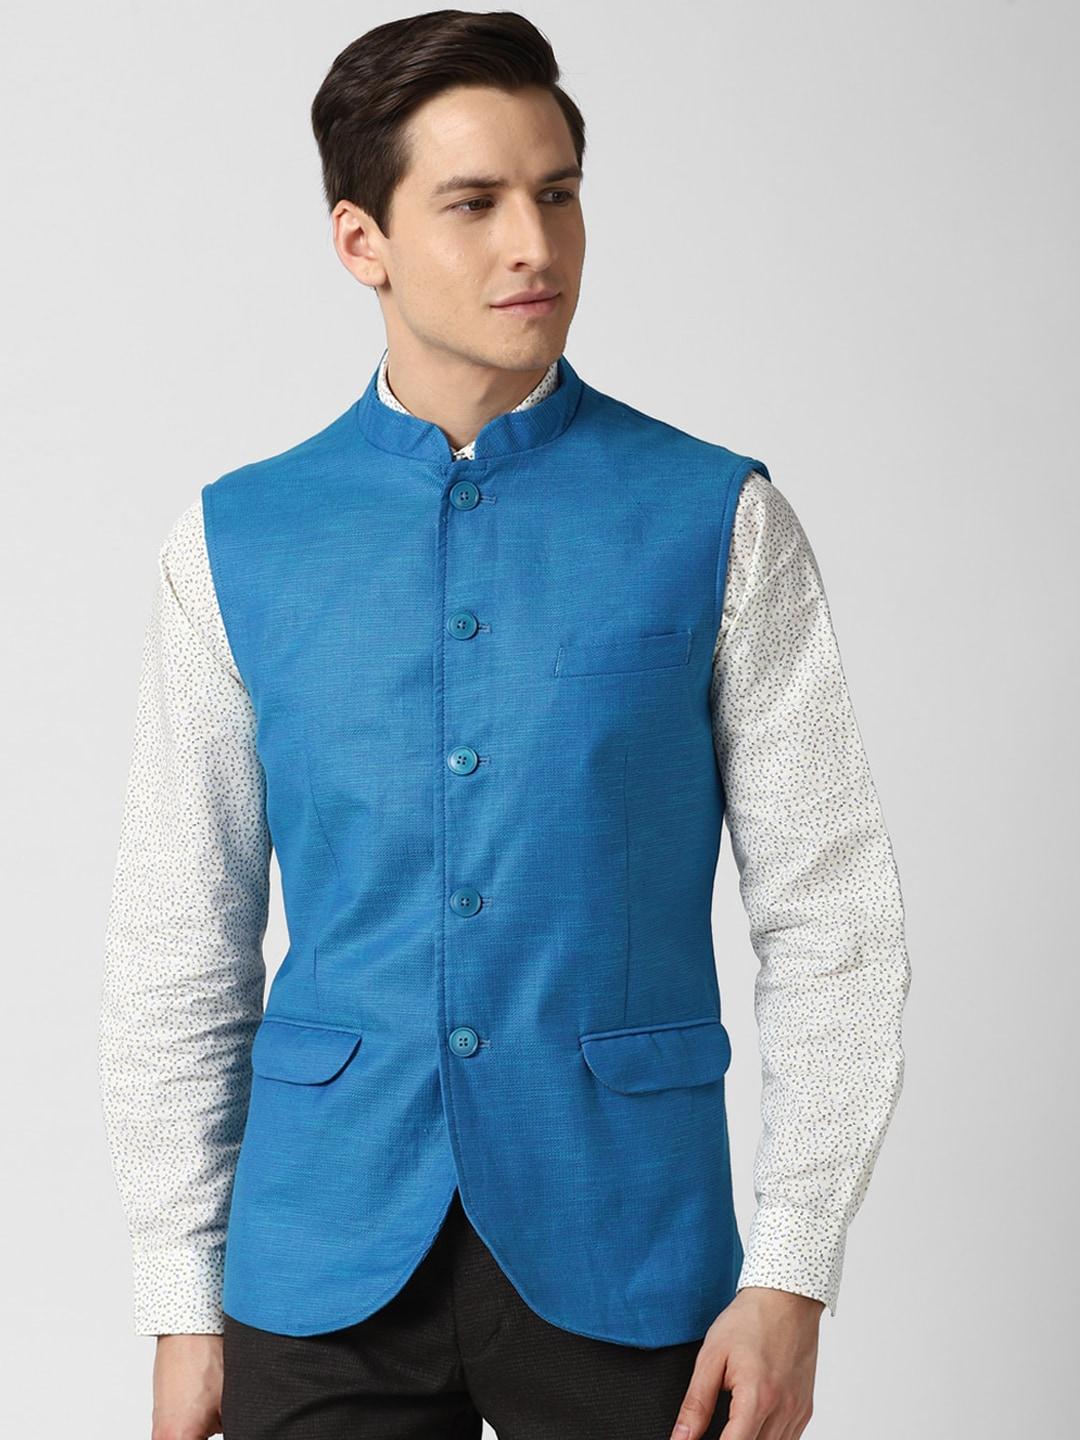 peter-england-elite-men-blue-solid-woven-nehru-jacket